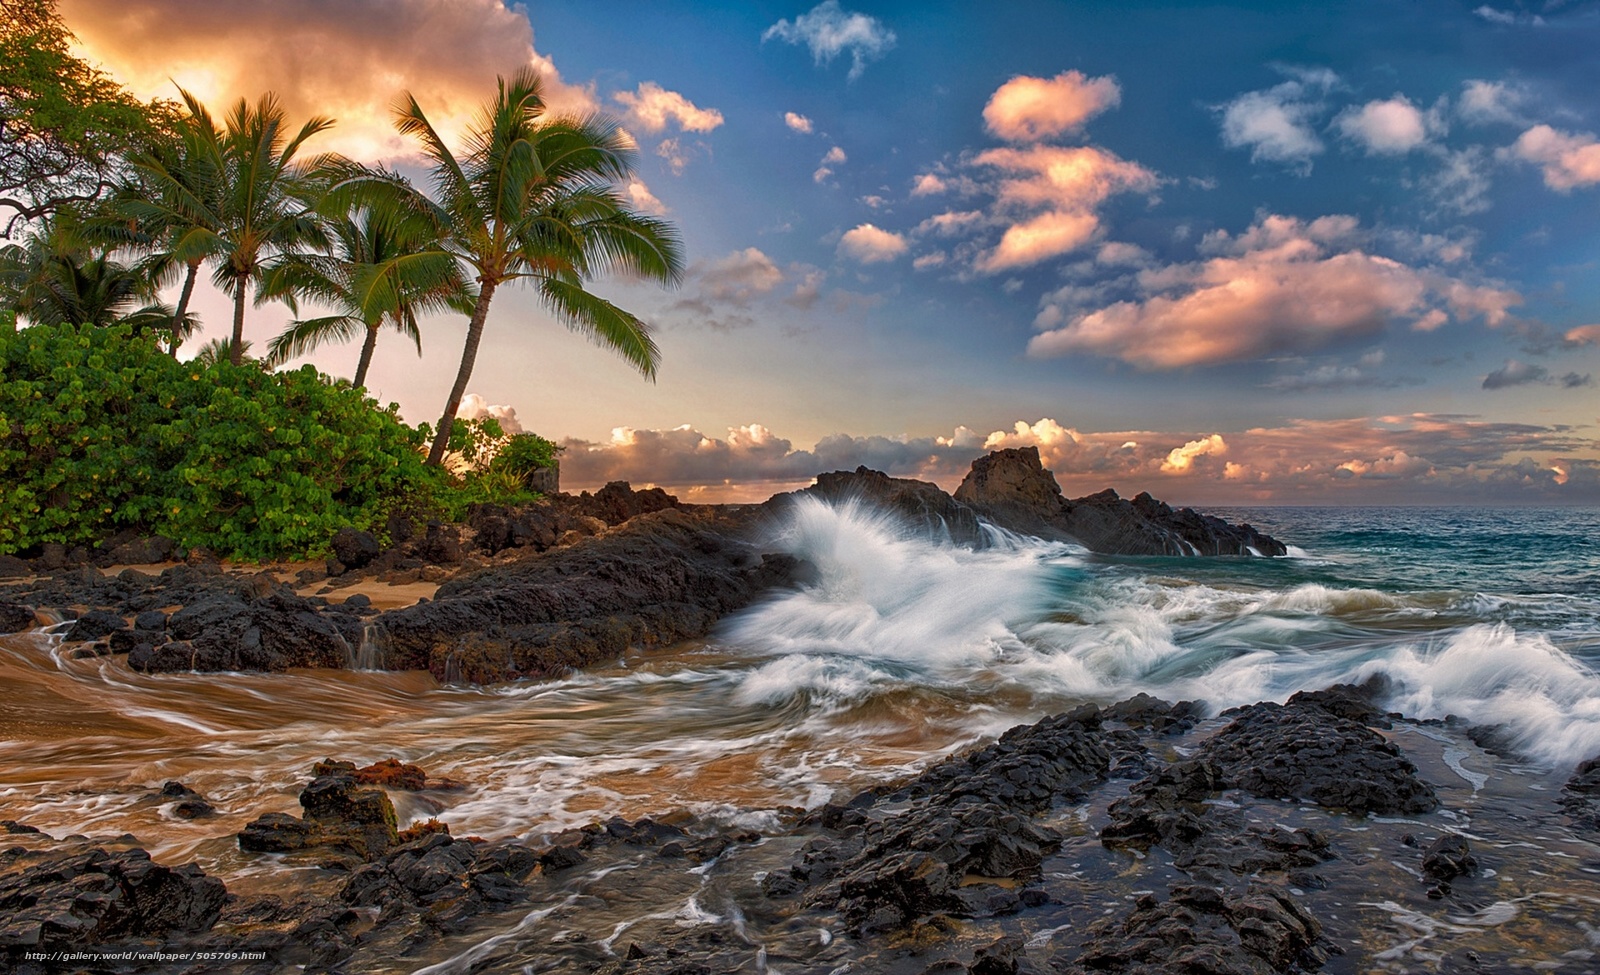 Download wallpaper maui hawaii Maui Hawaii free desktop wallpaper